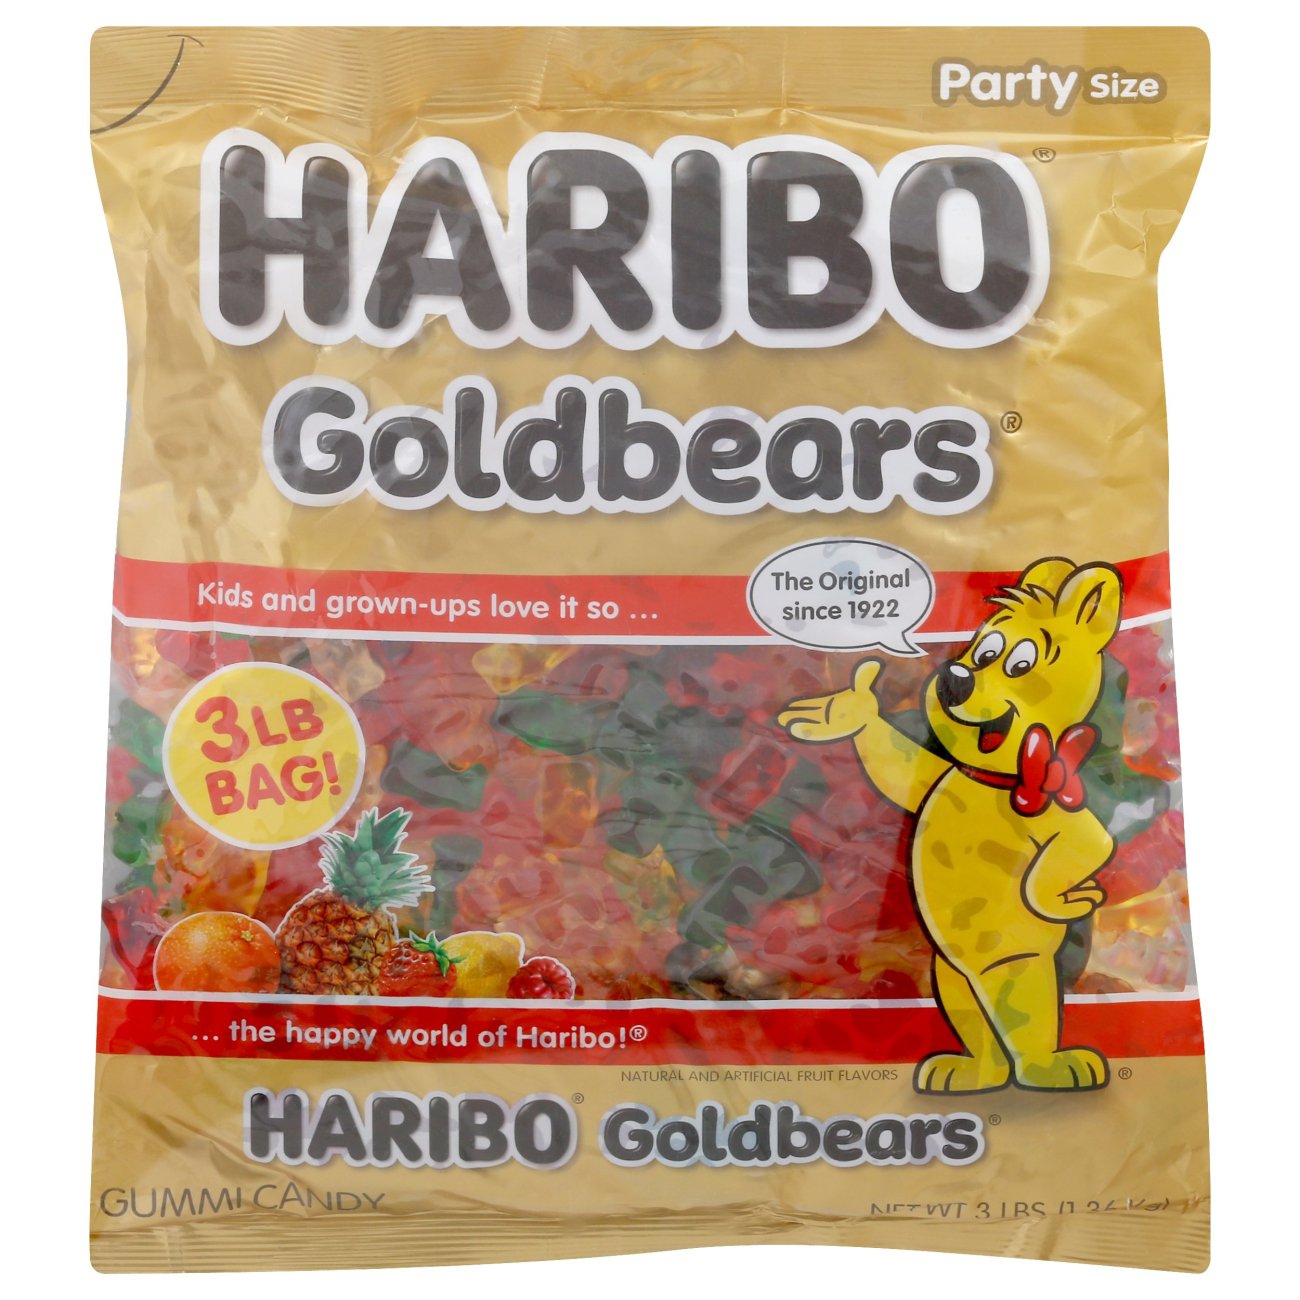 Haribo Gold-Bears Gummy Bears Candy: 1.8LB Bag